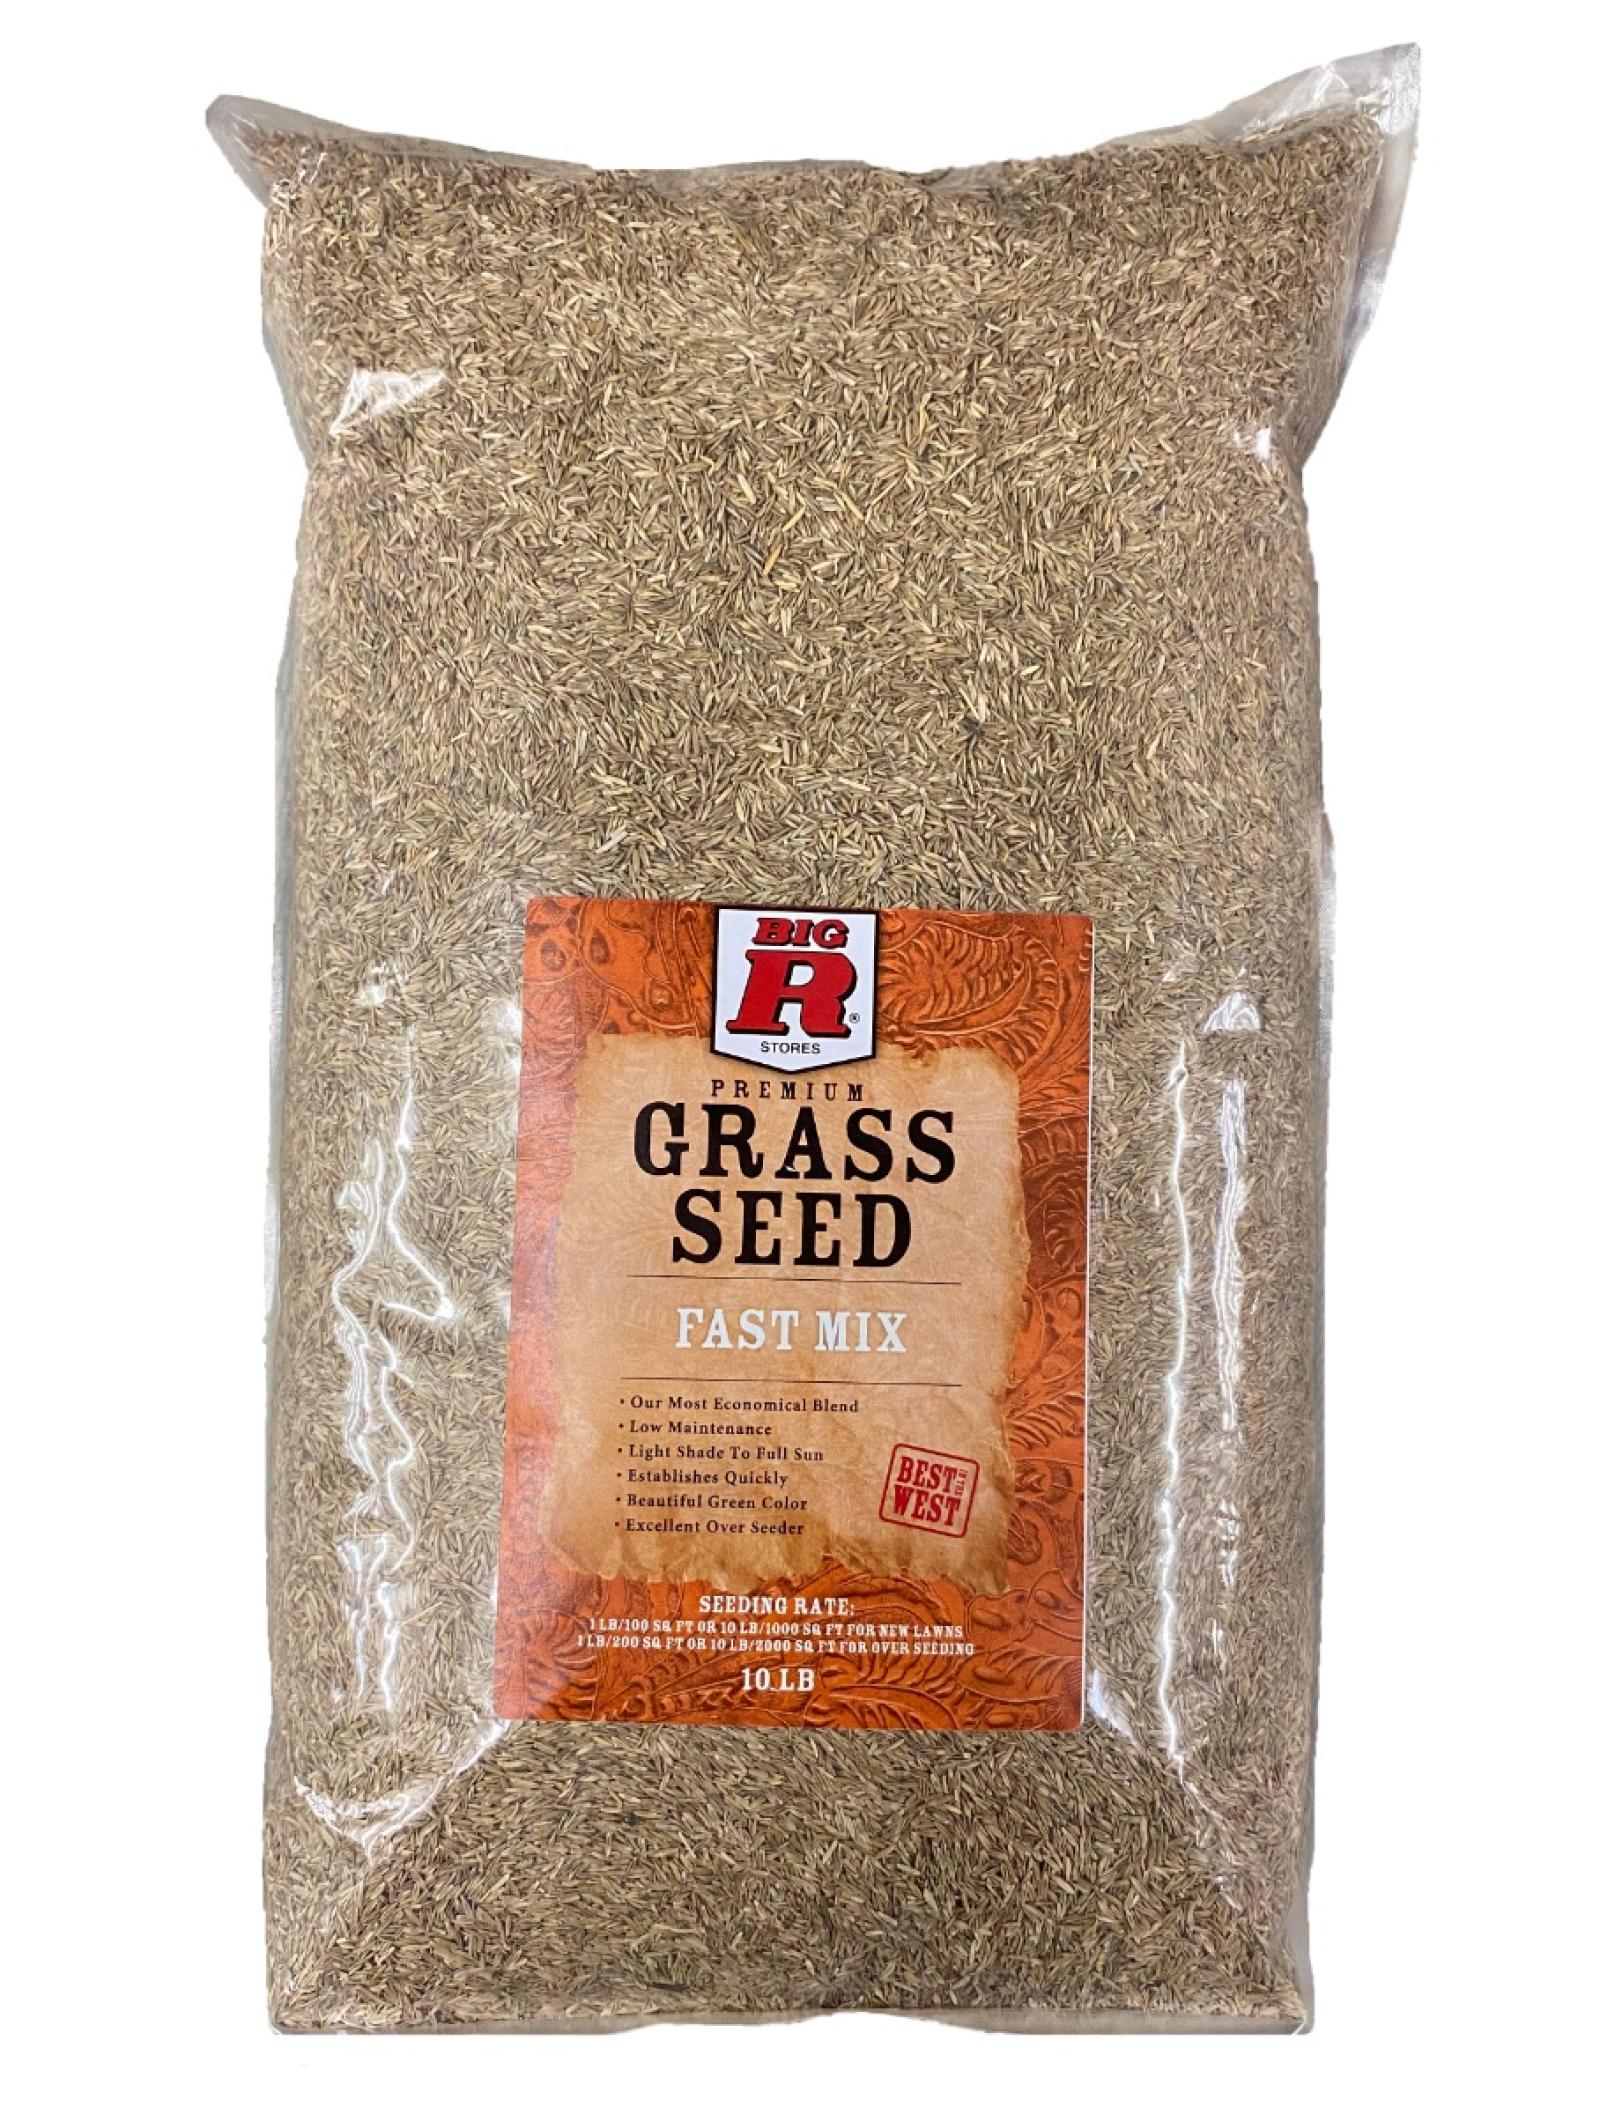 Shipton's Big R Fast Mix Grass Seed